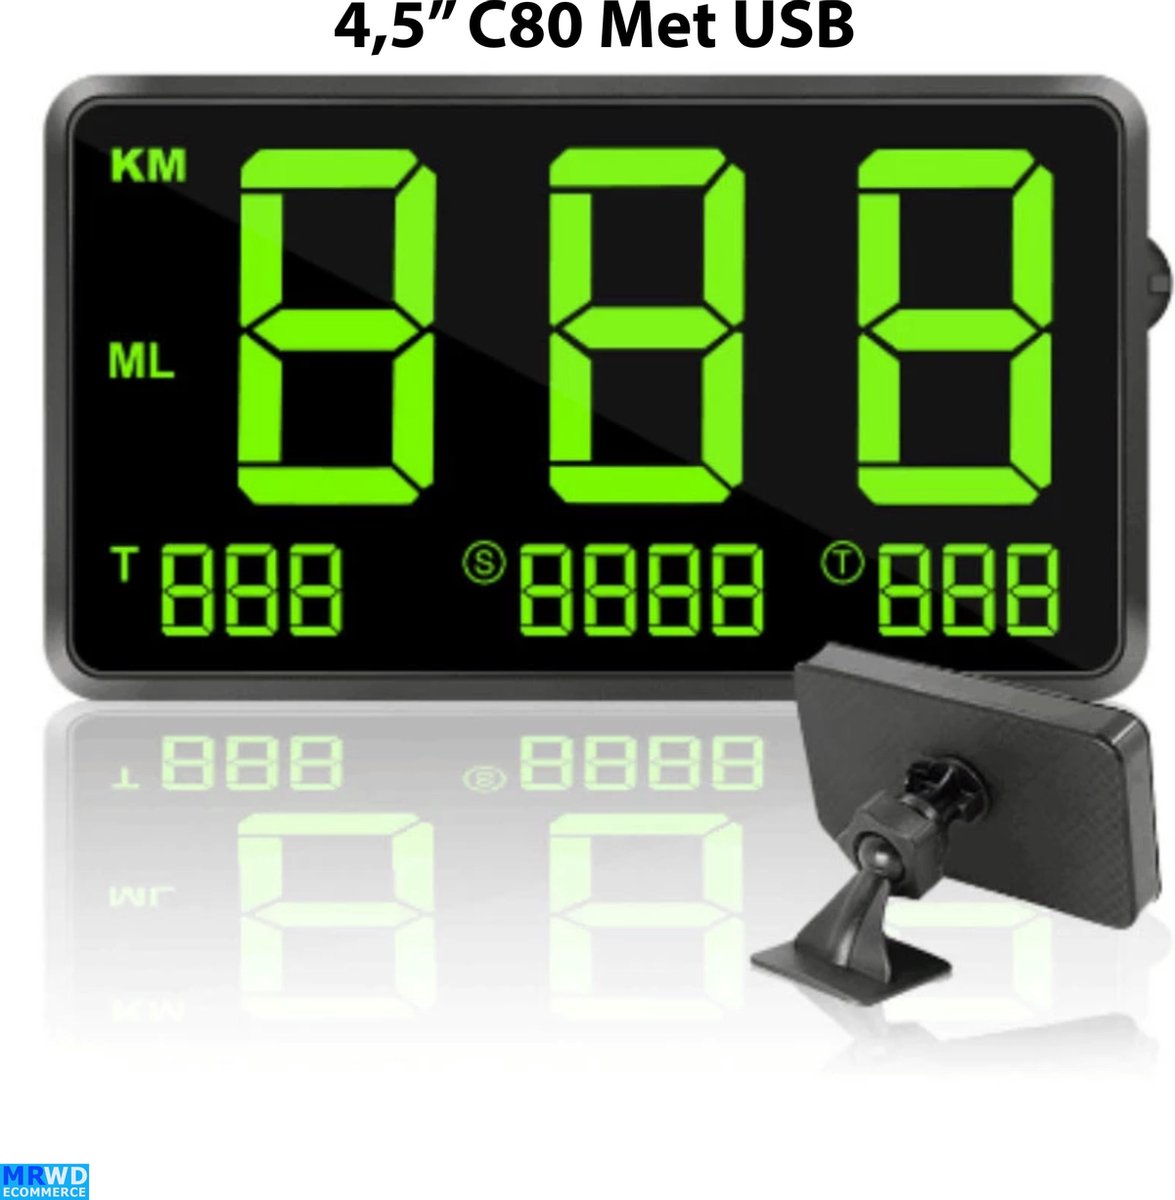 Gewend Australië Diverse GPS Auto Snelheidsmeter C80 | USB 4.5" | km/h en mph | bol.com